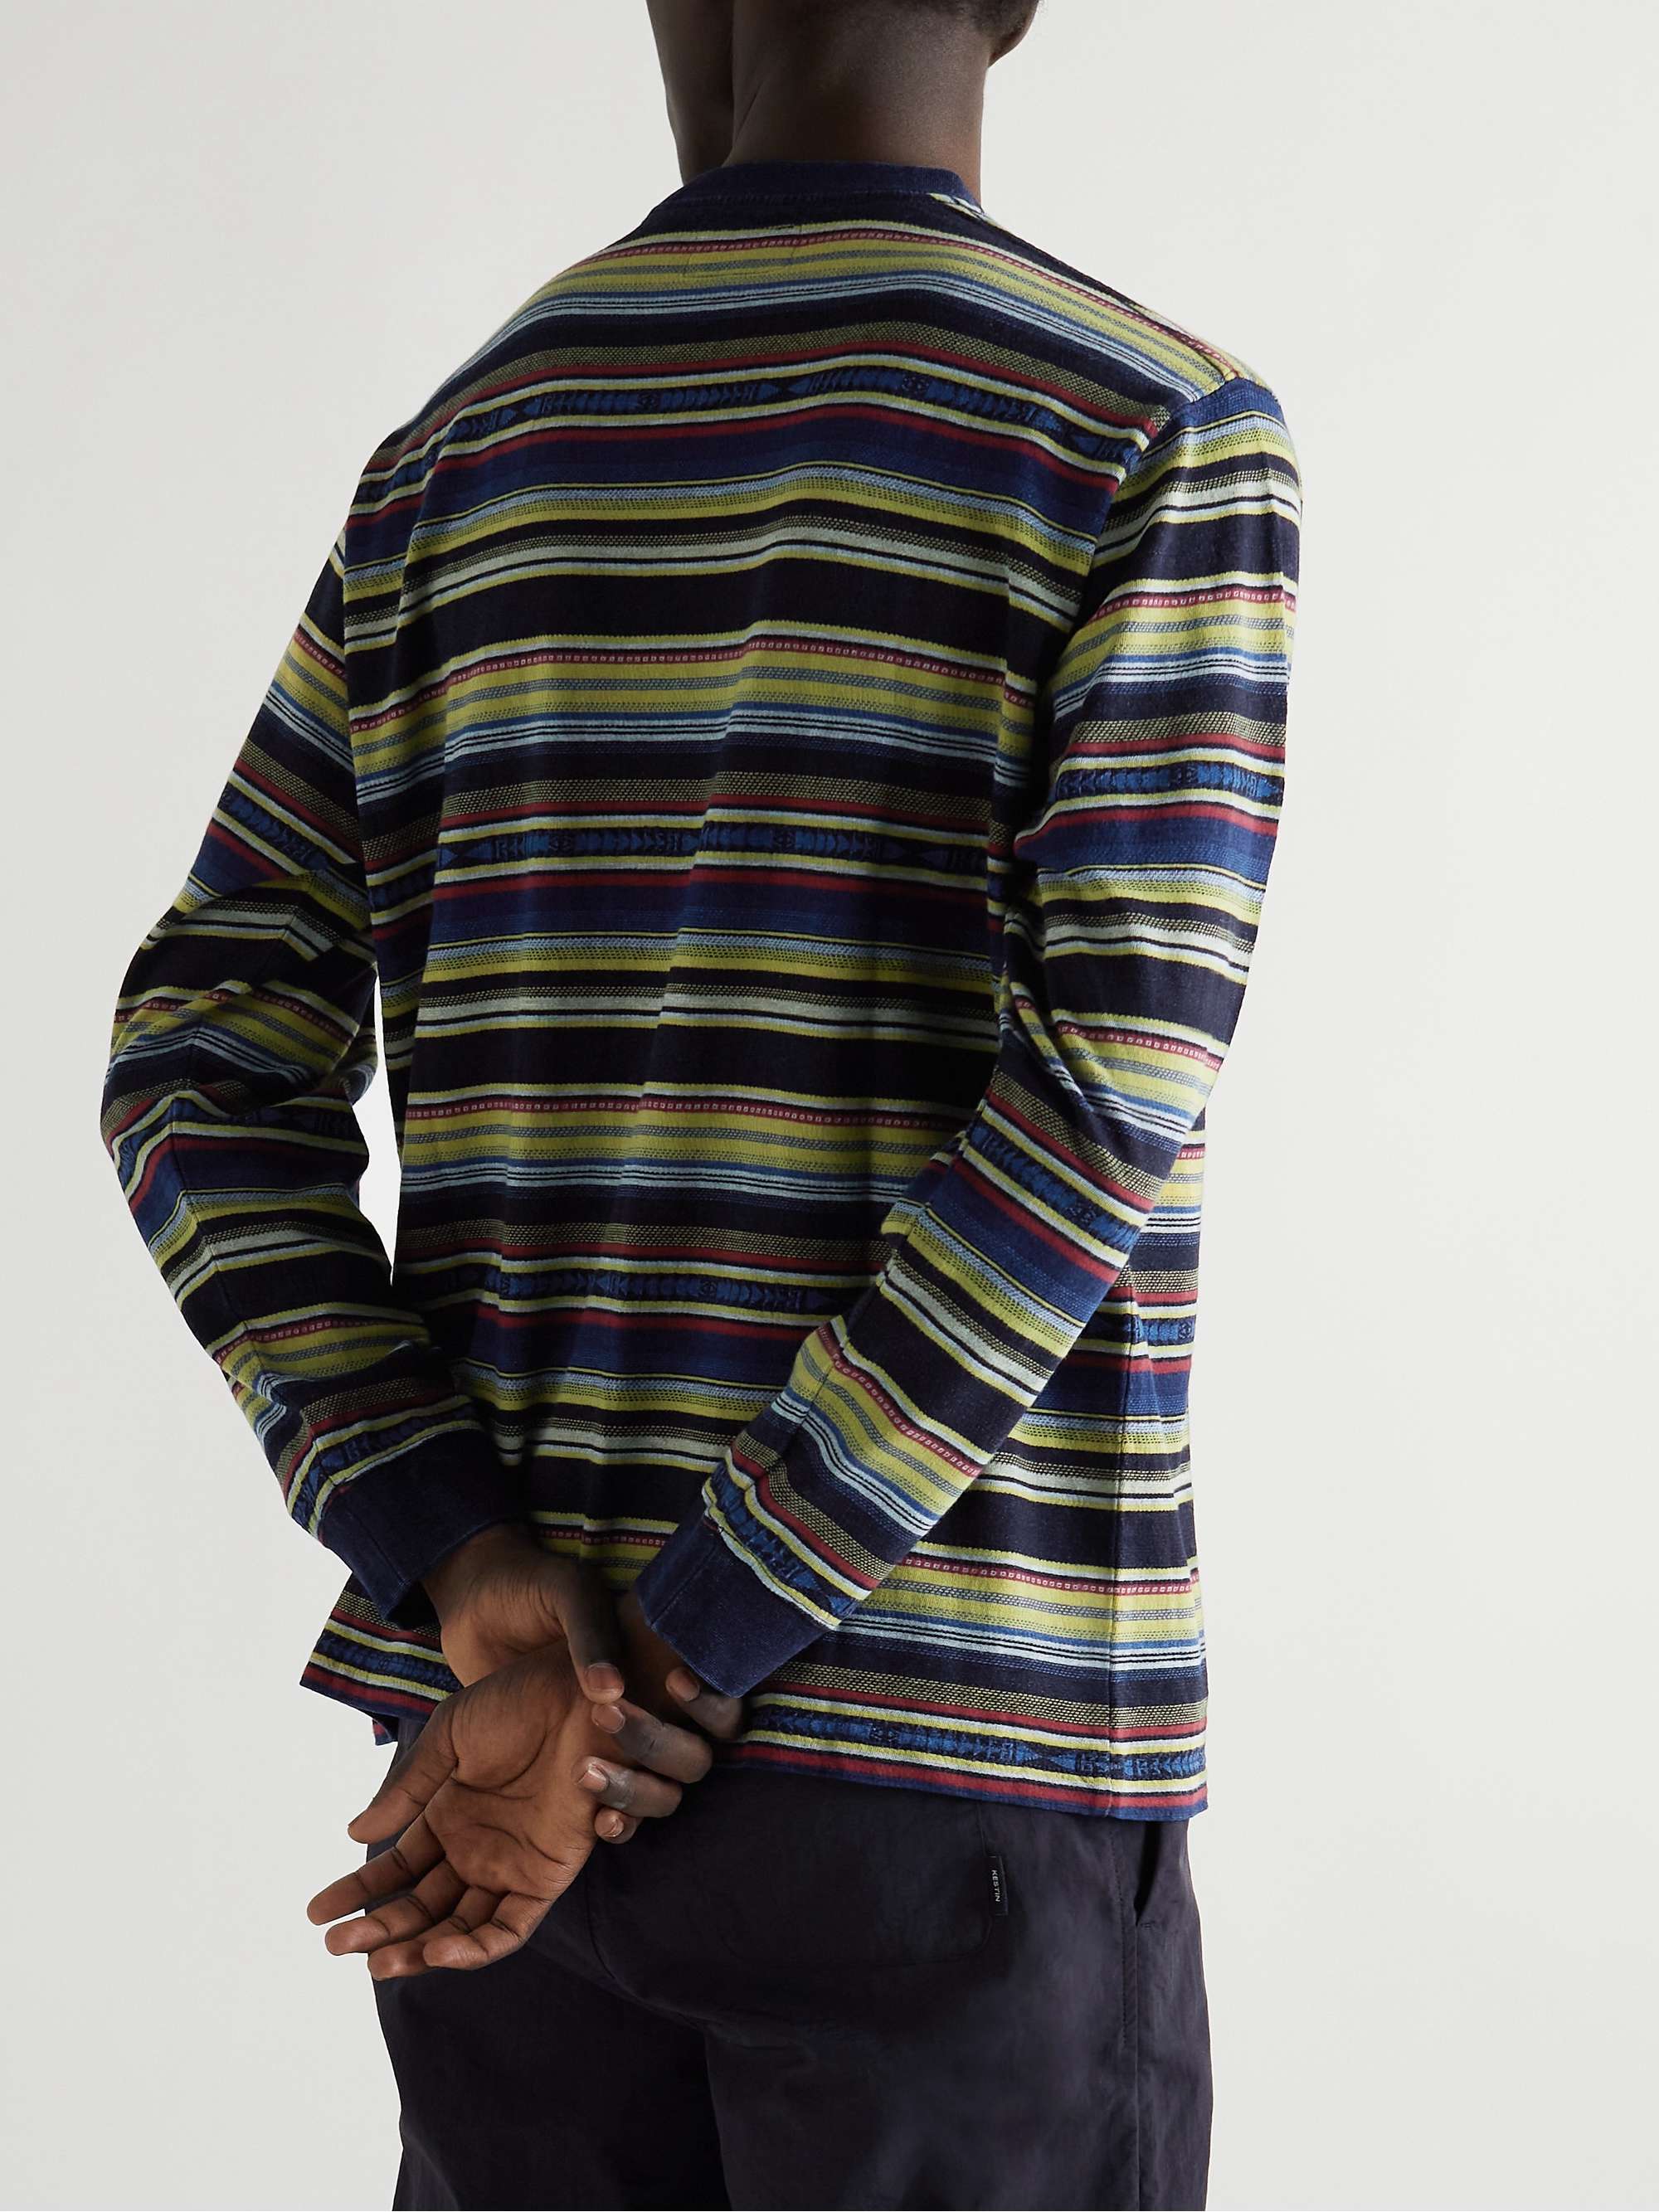 BEAMS PLUS Striped Cotton-Jacquard T-Shirt